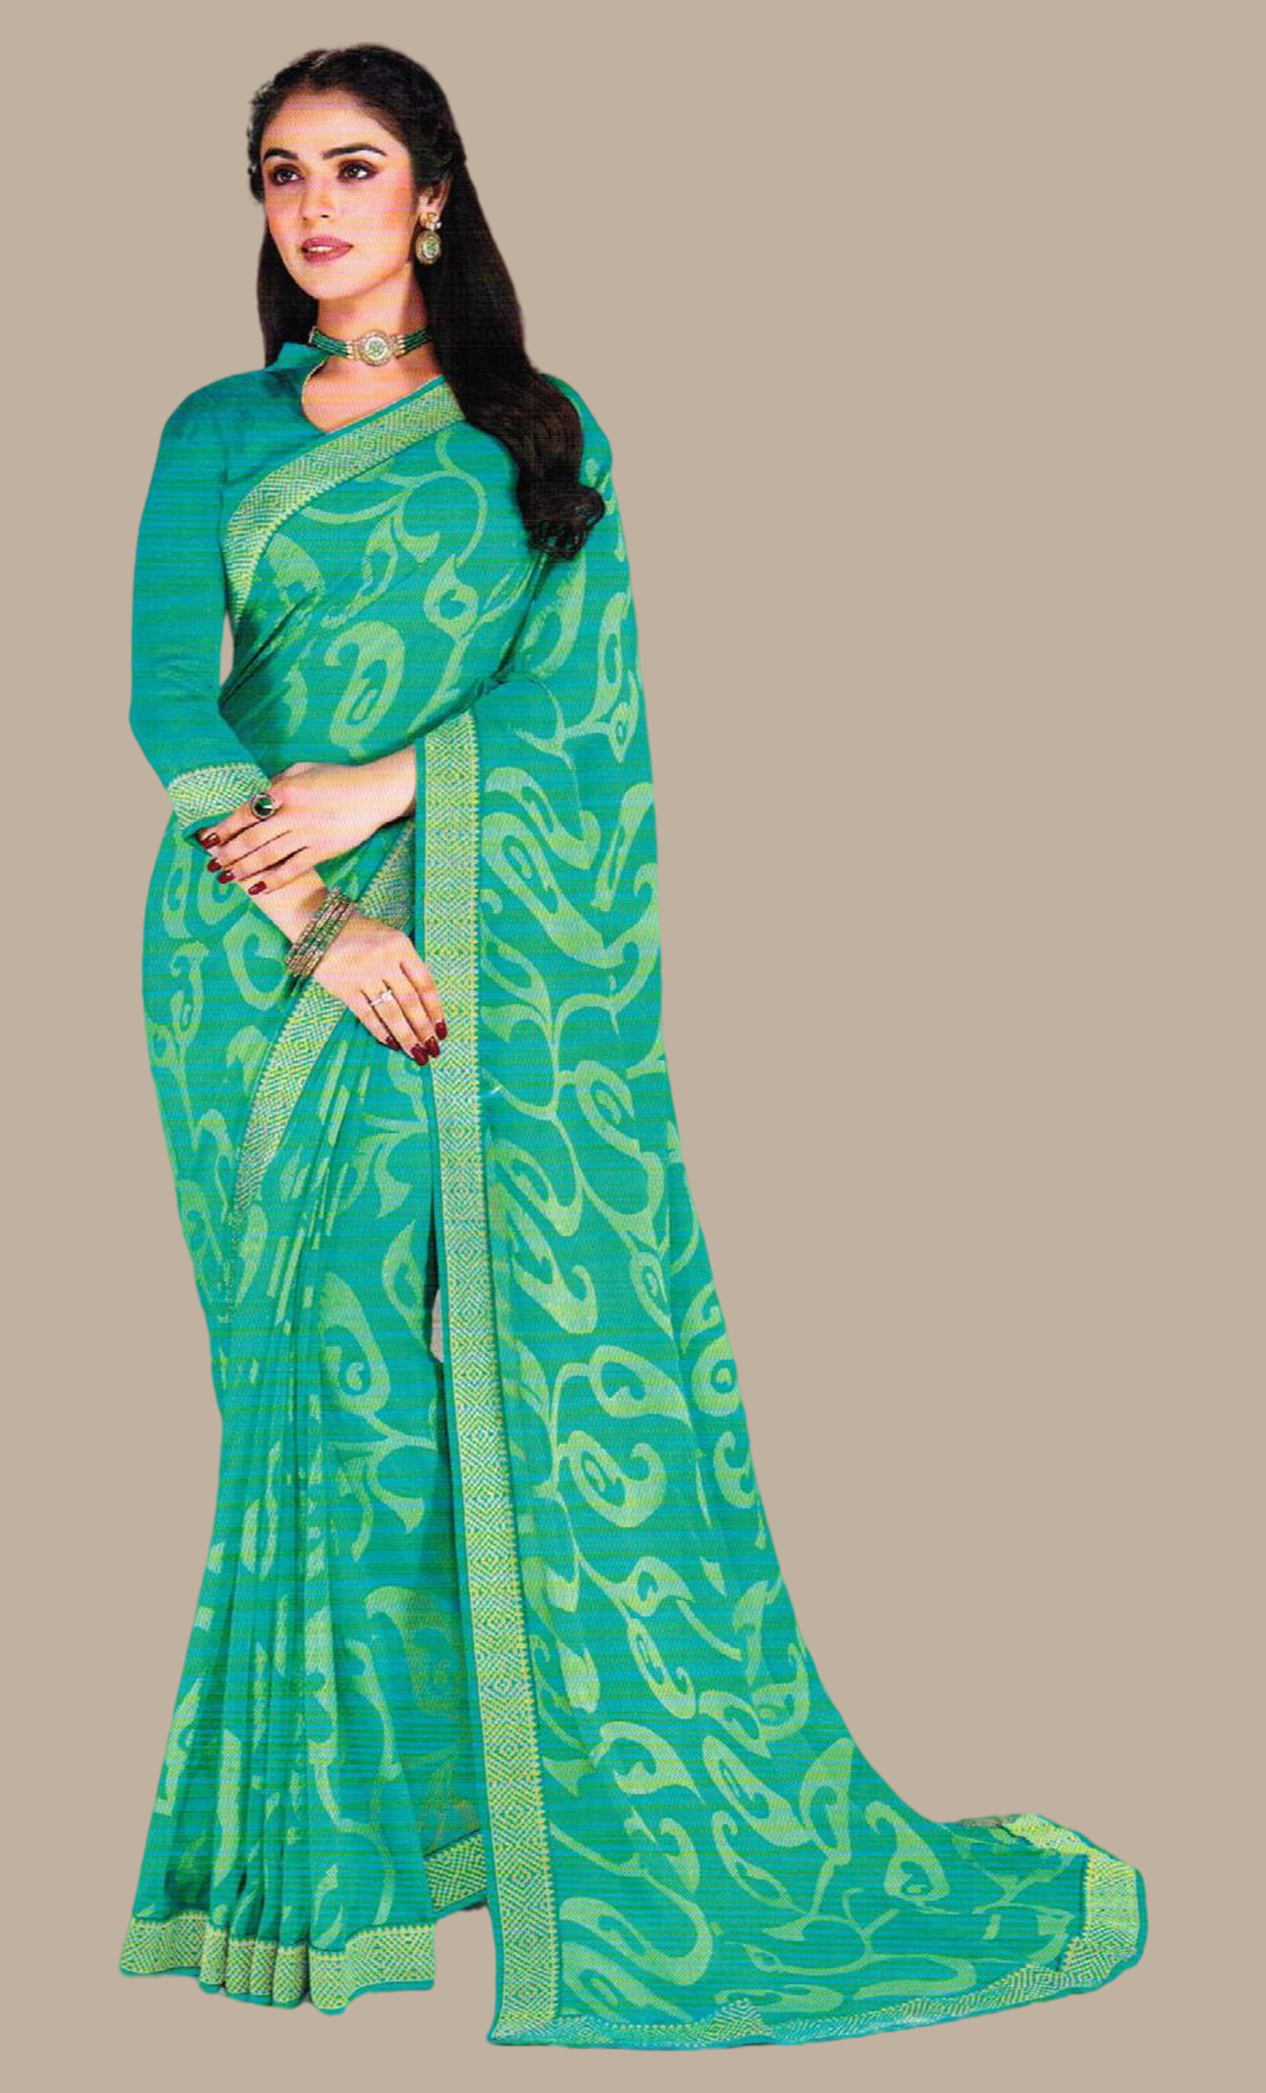 Teal Green Embroidered Cotton Sari